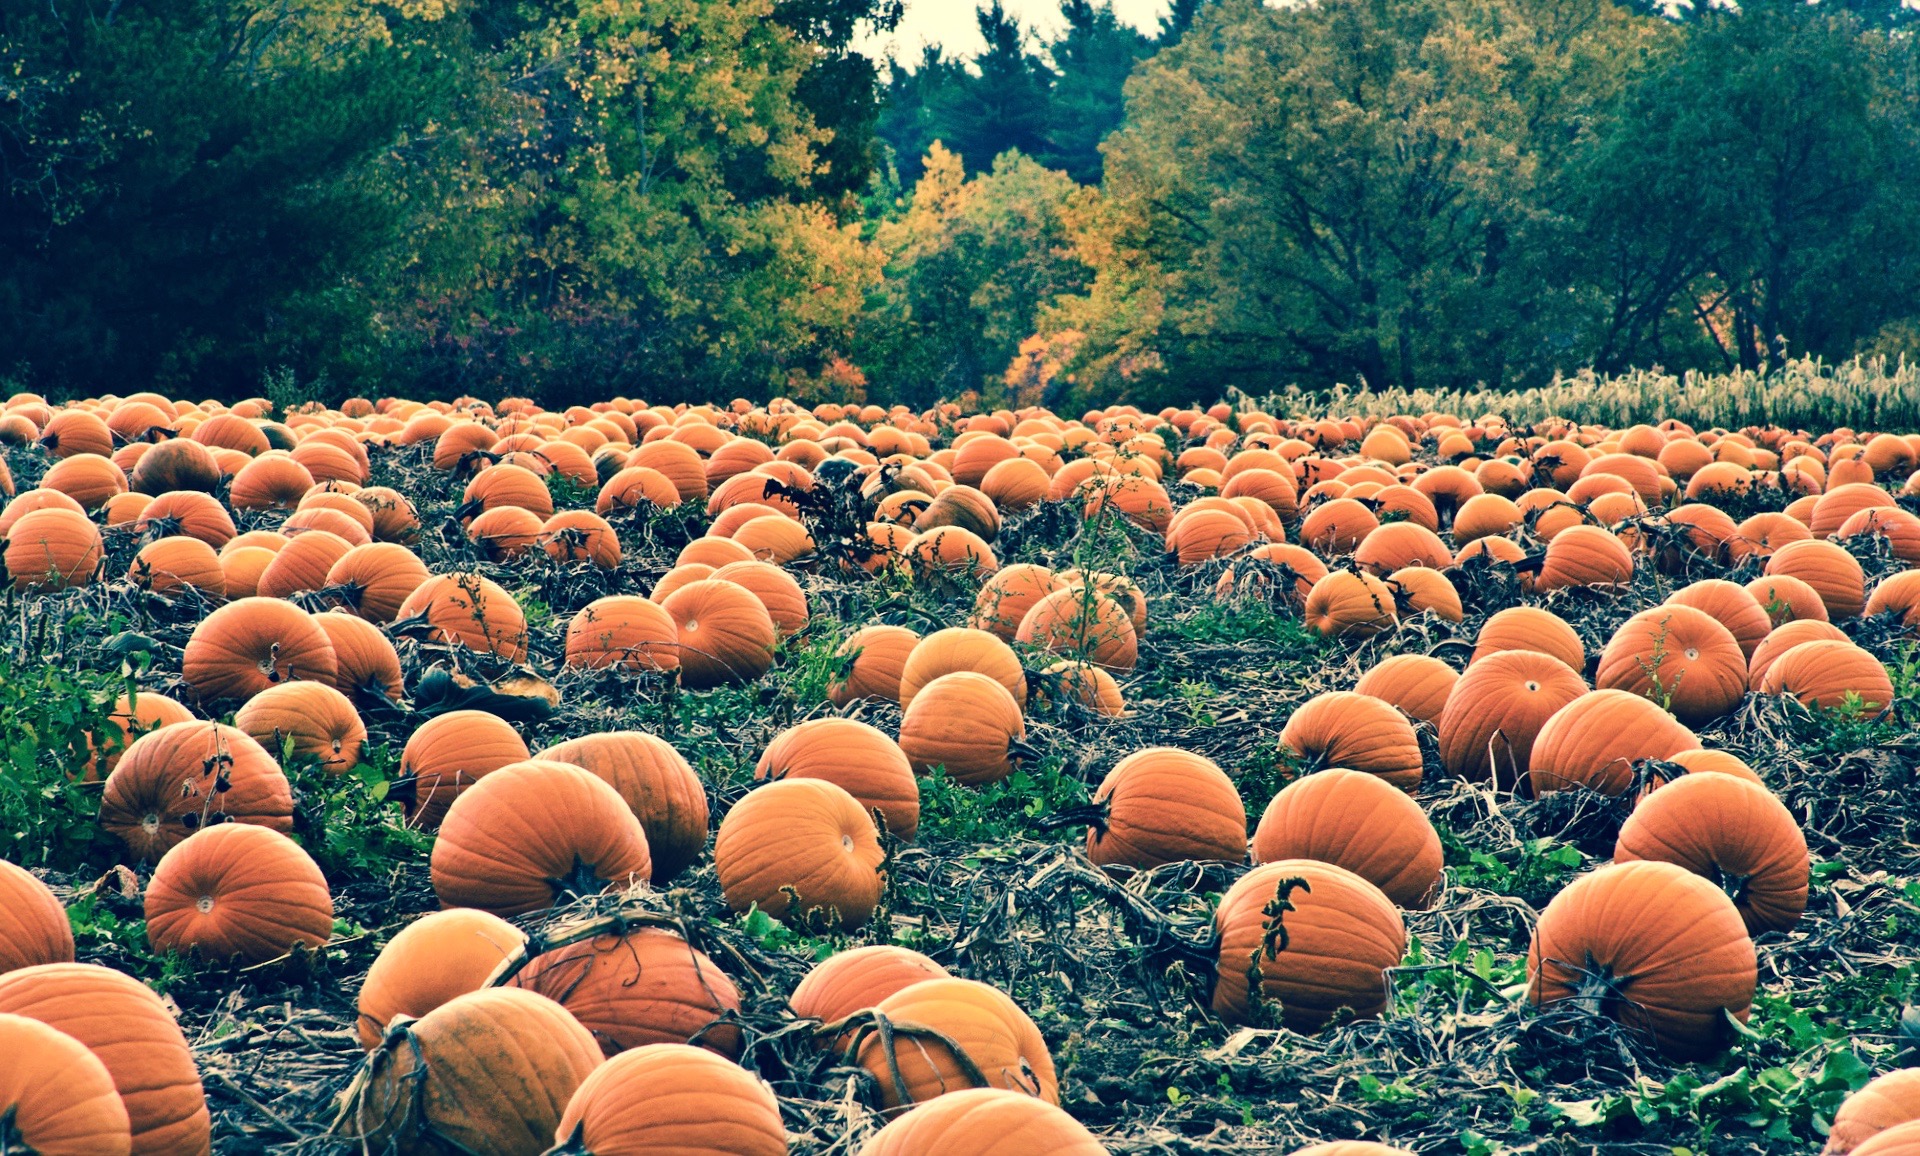 Pumpkins and Food Security